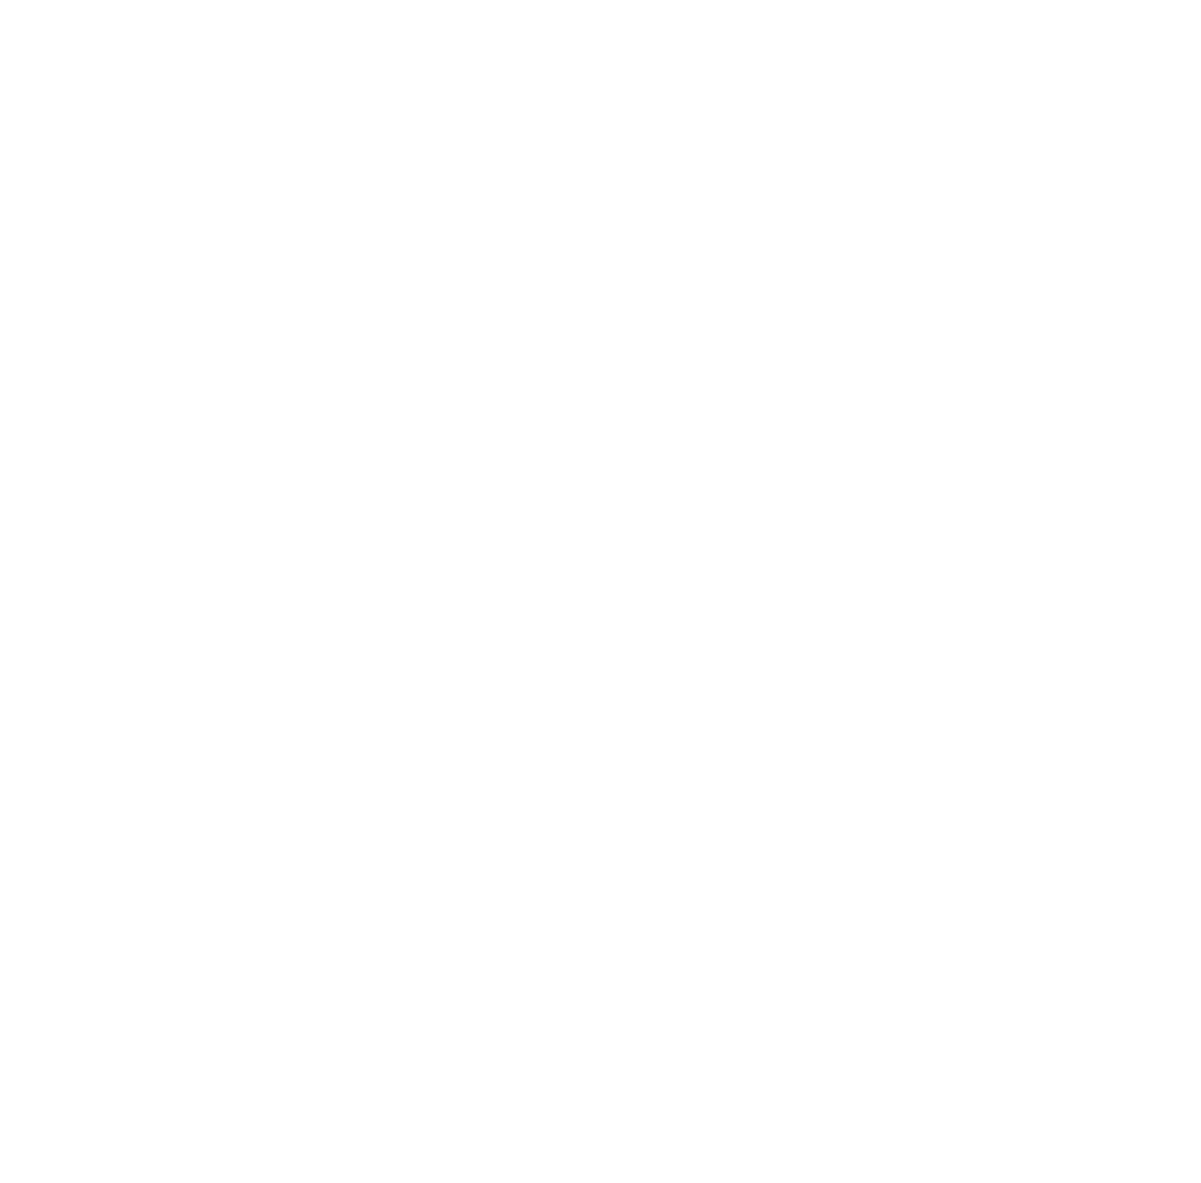 galveston charter fishing trips